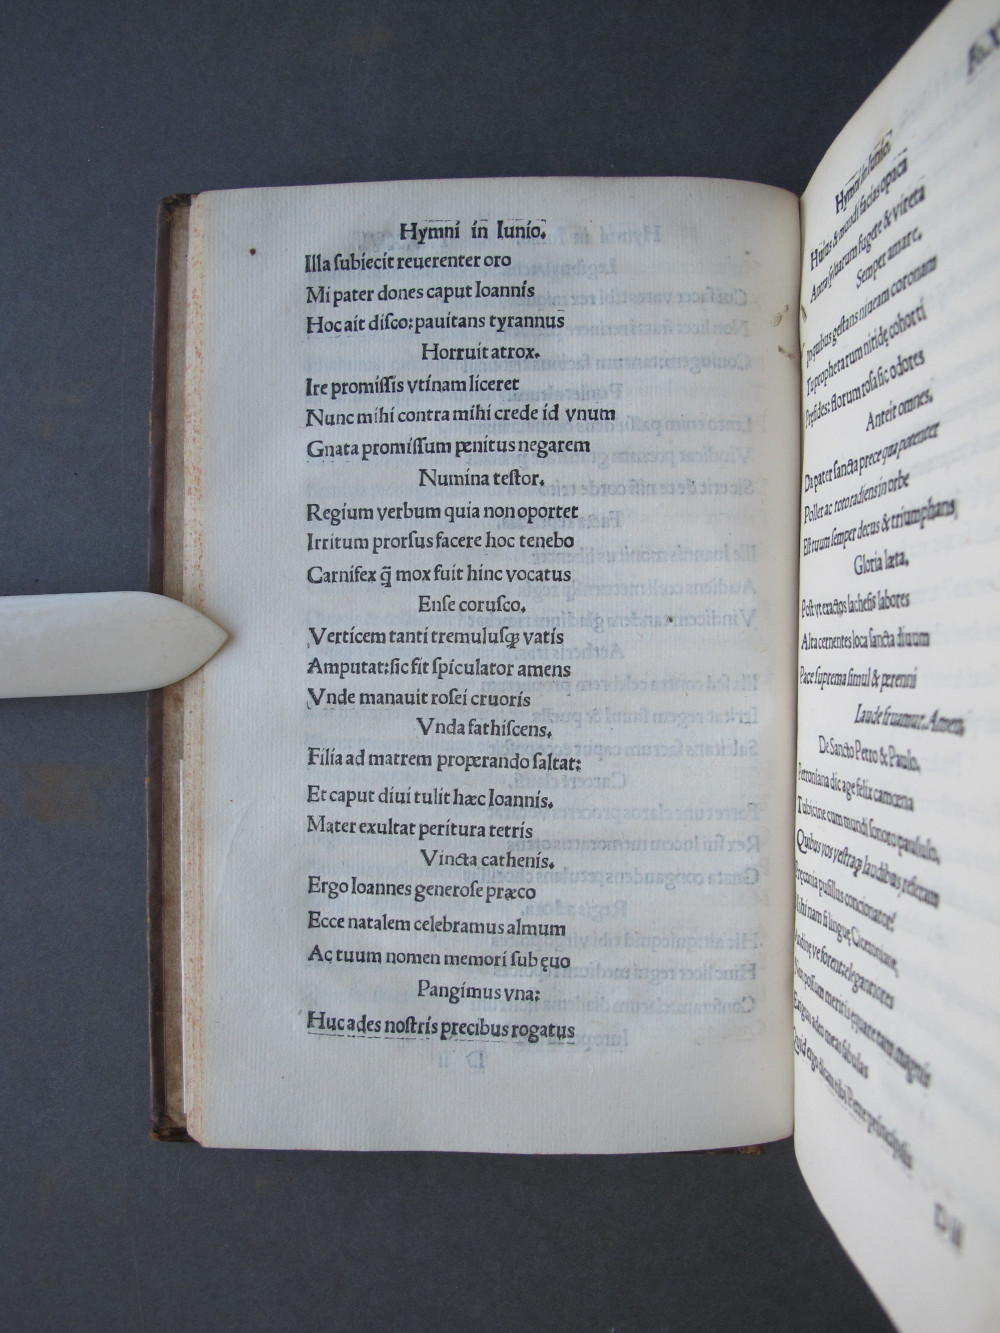 Folio 26 verso